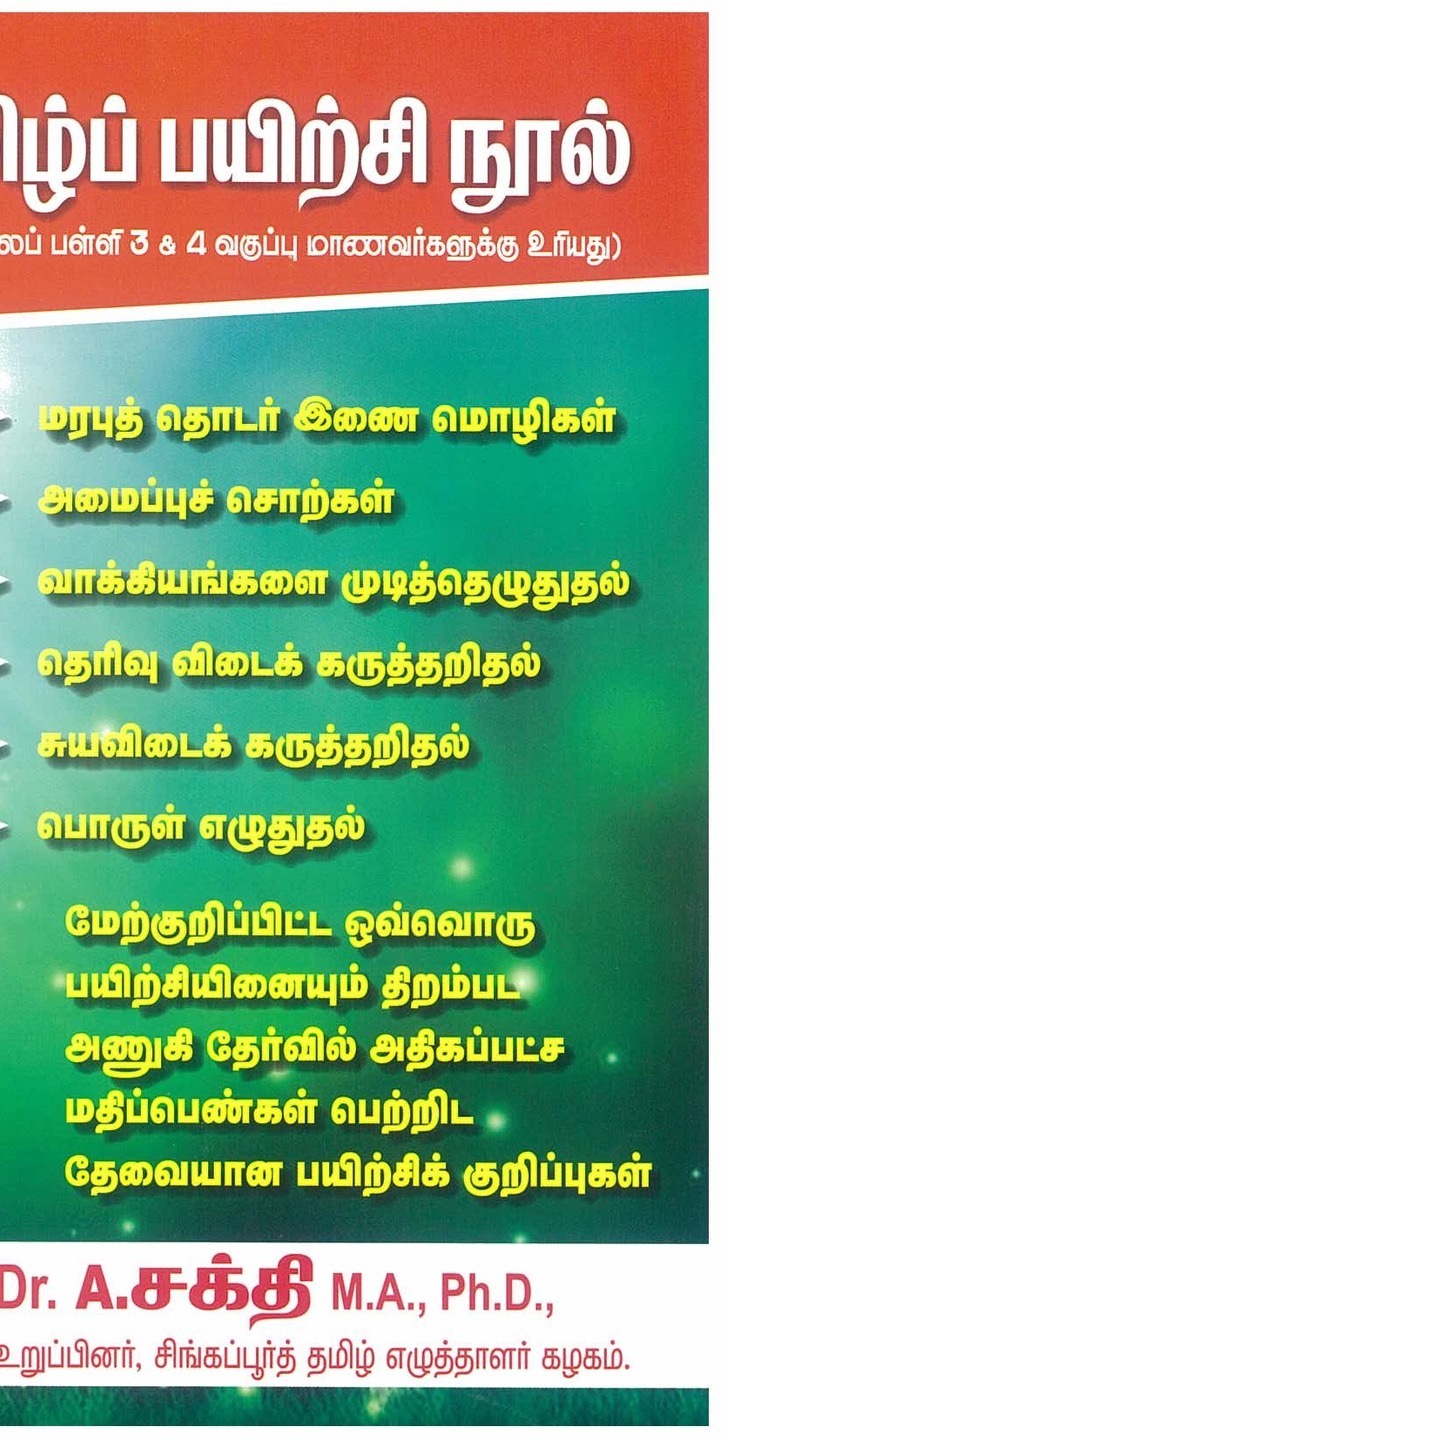 Tamil Guru Sec 3/4 Express Payirchi Nool